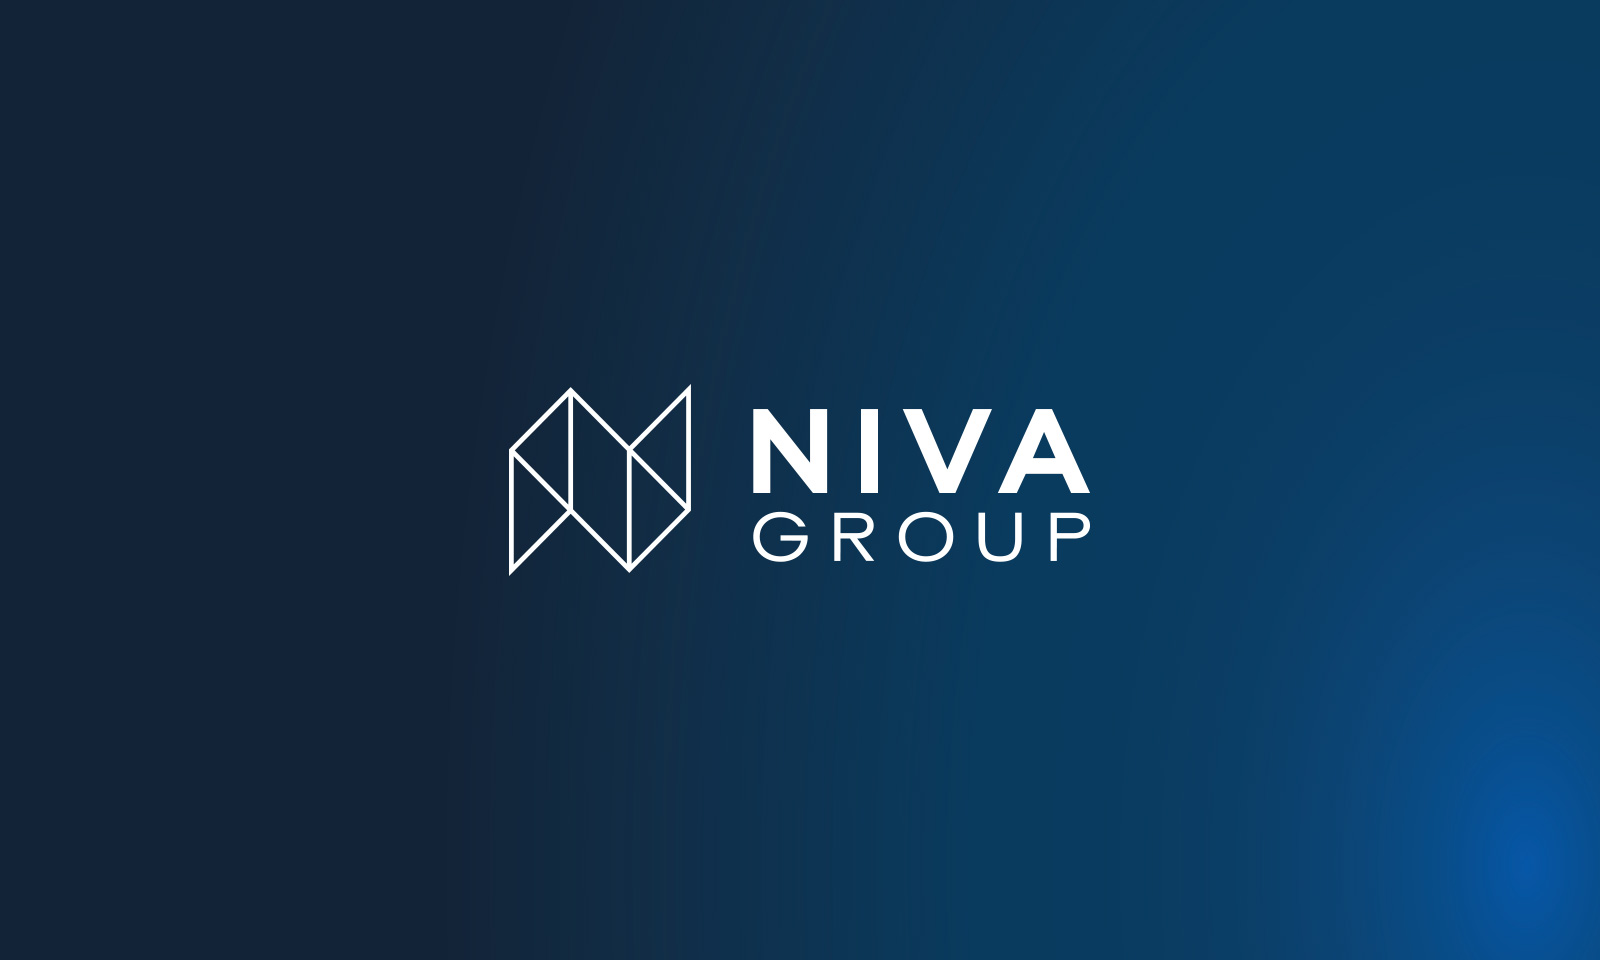 NIVA Group